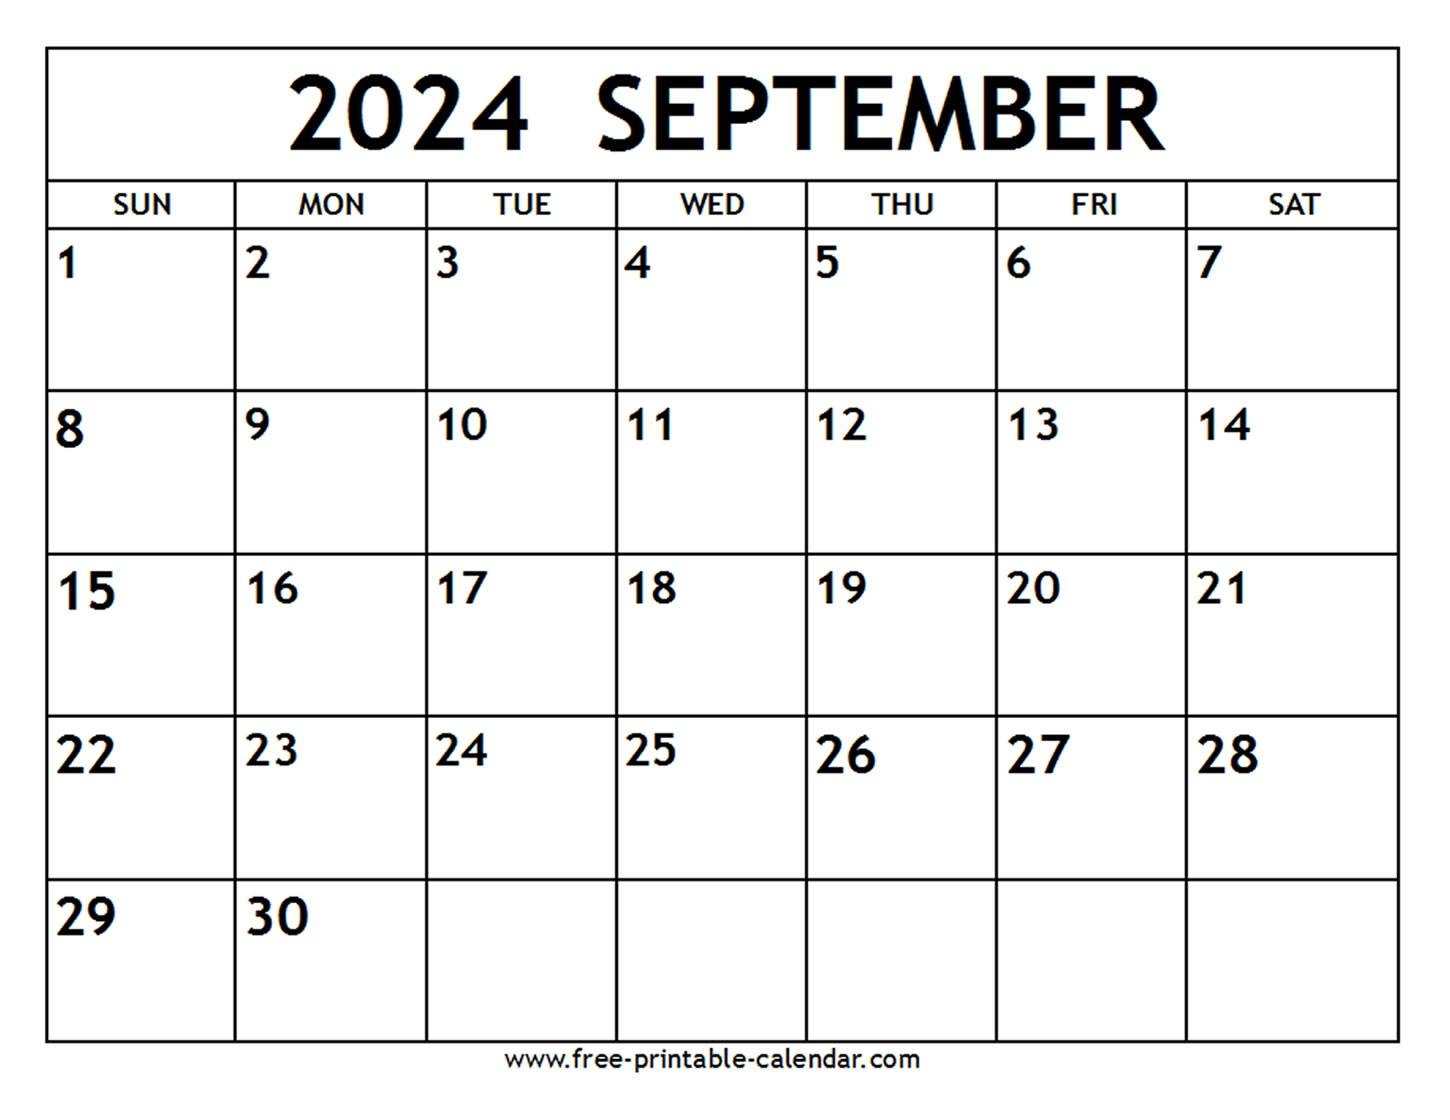 September 2024 Calendar - Free-Printable-Calendar in Free Printable Calendar 2024 For September